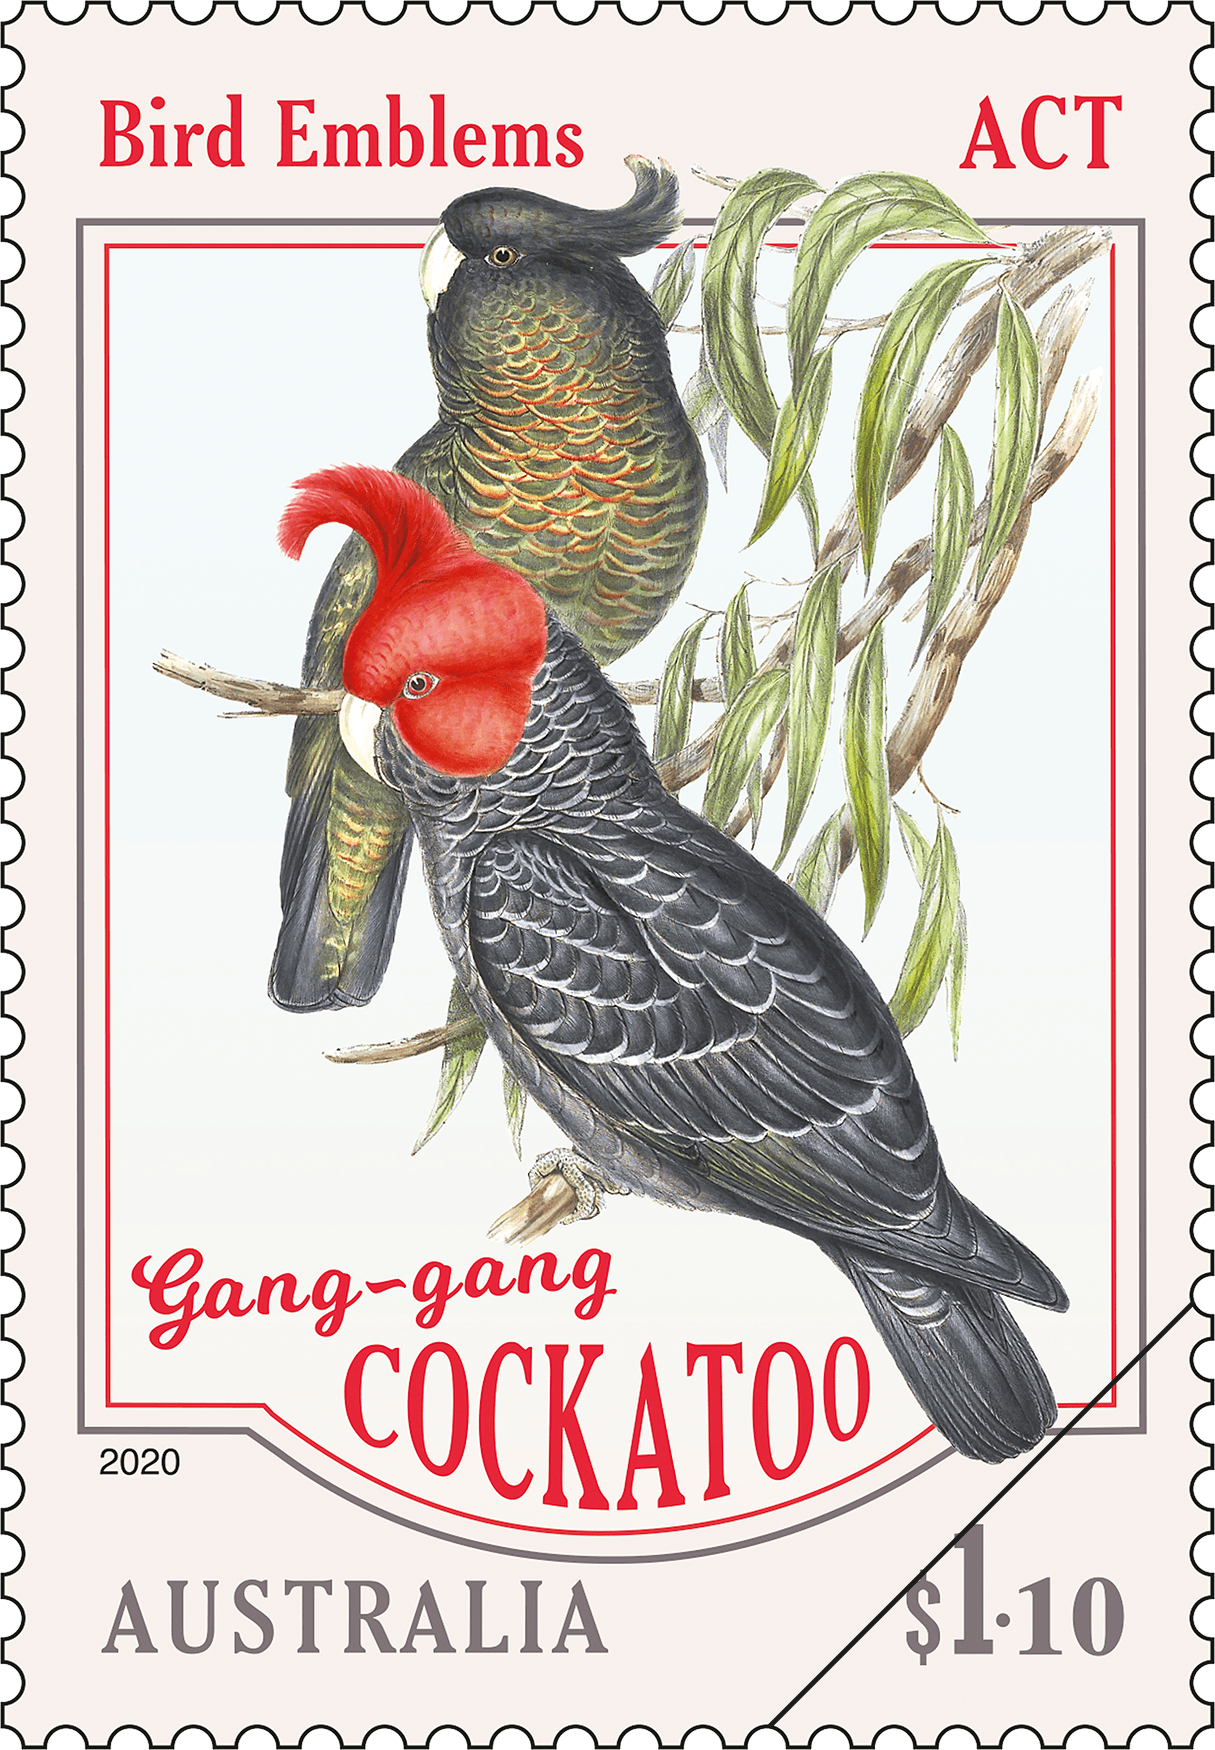 gang gang cockatoo national bird of